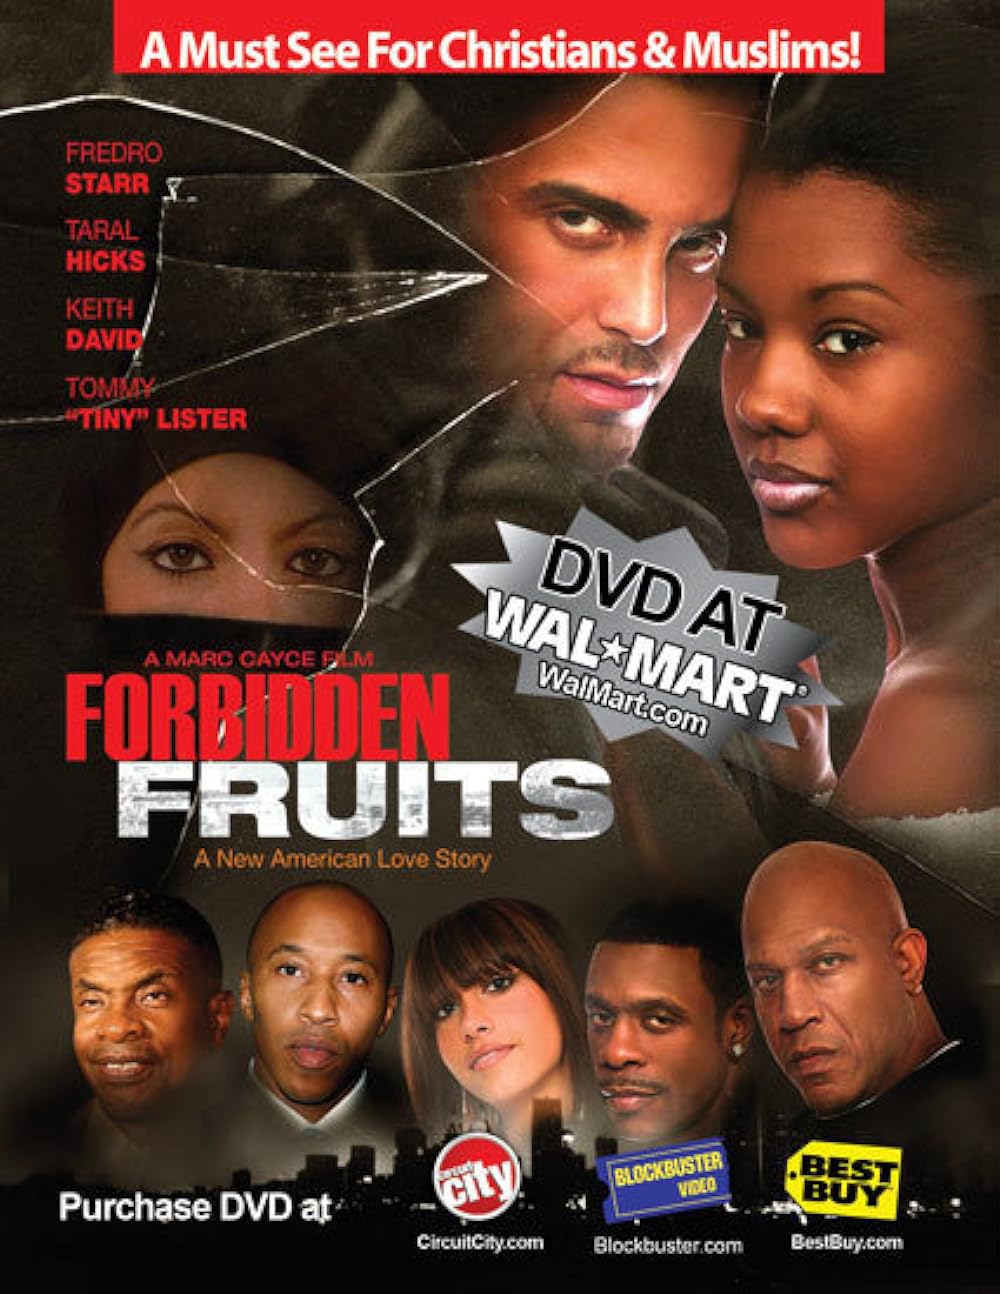 abdelrahman hosny recommends forbidden fruit films free pic